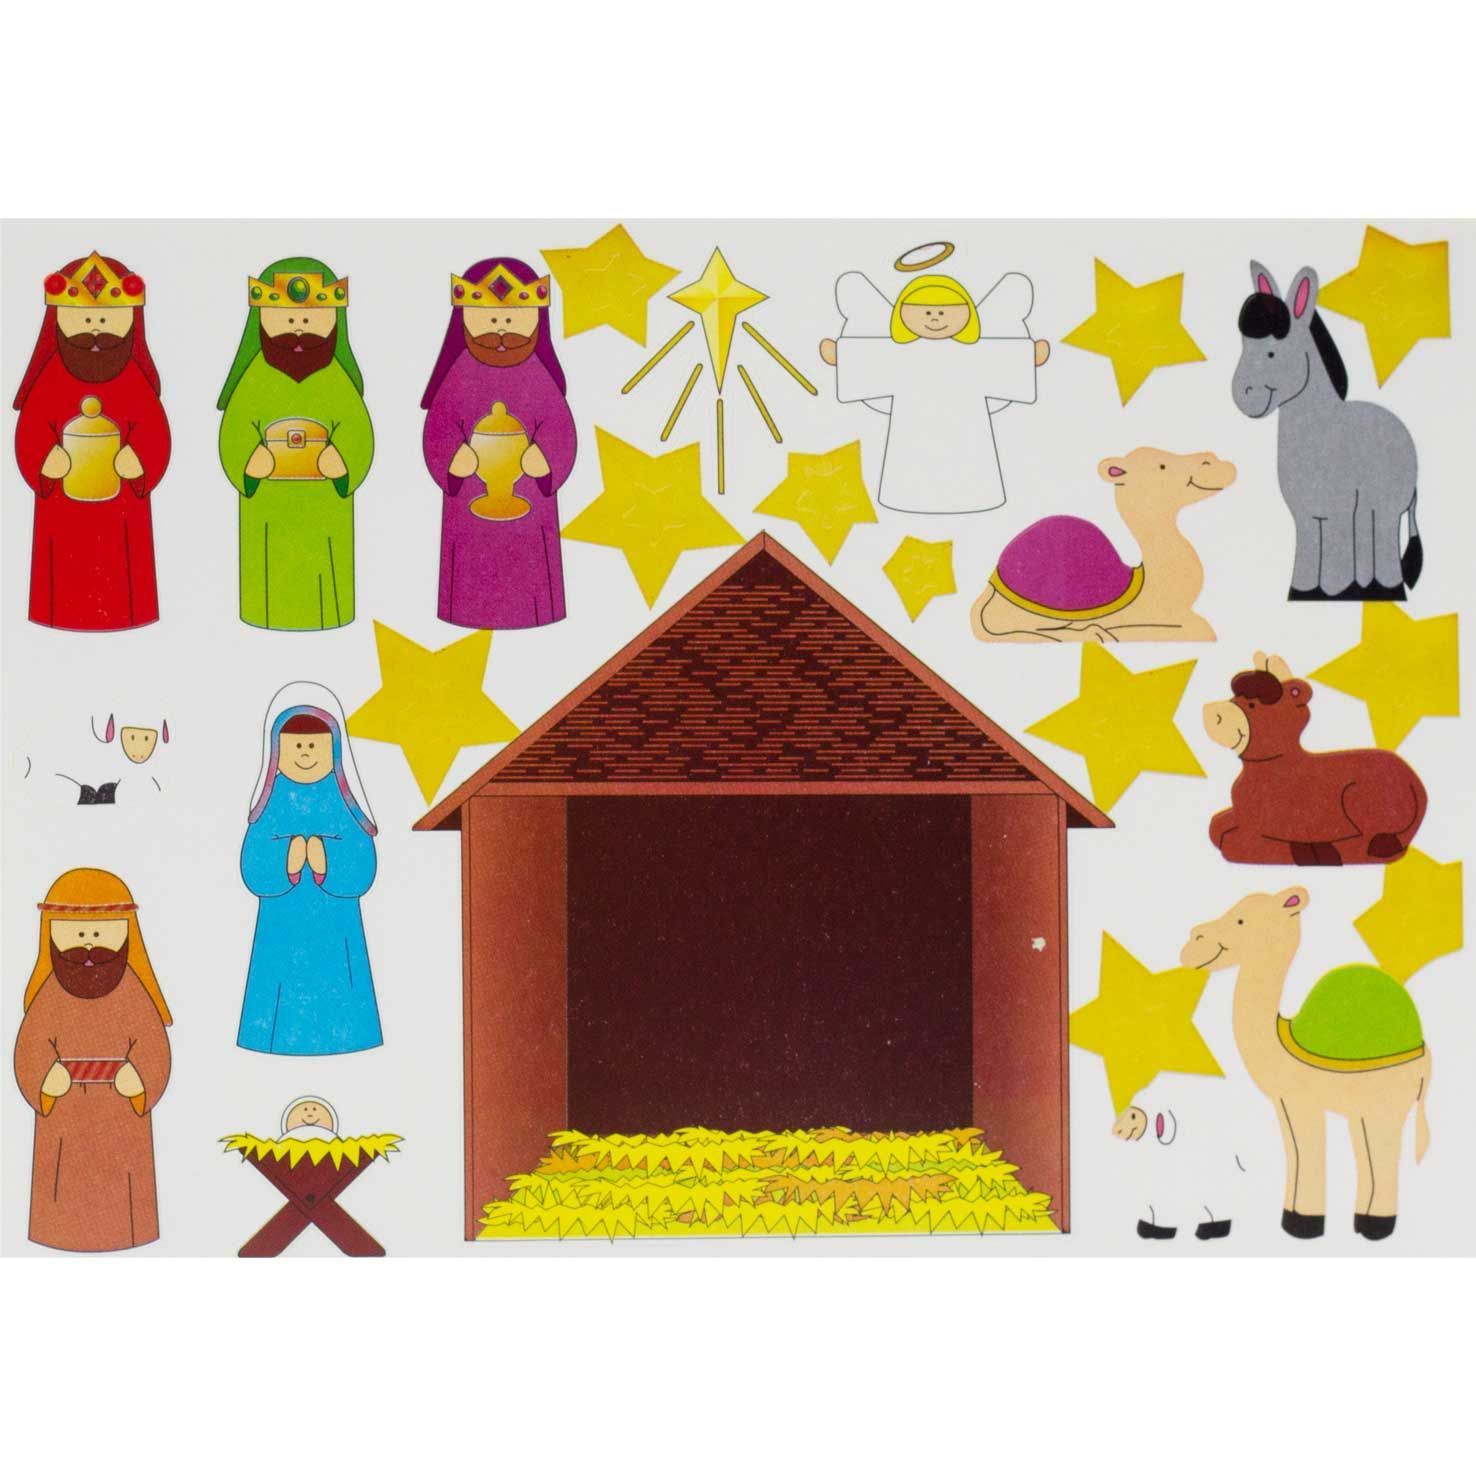 Make-a-Nativity Scene Stickers